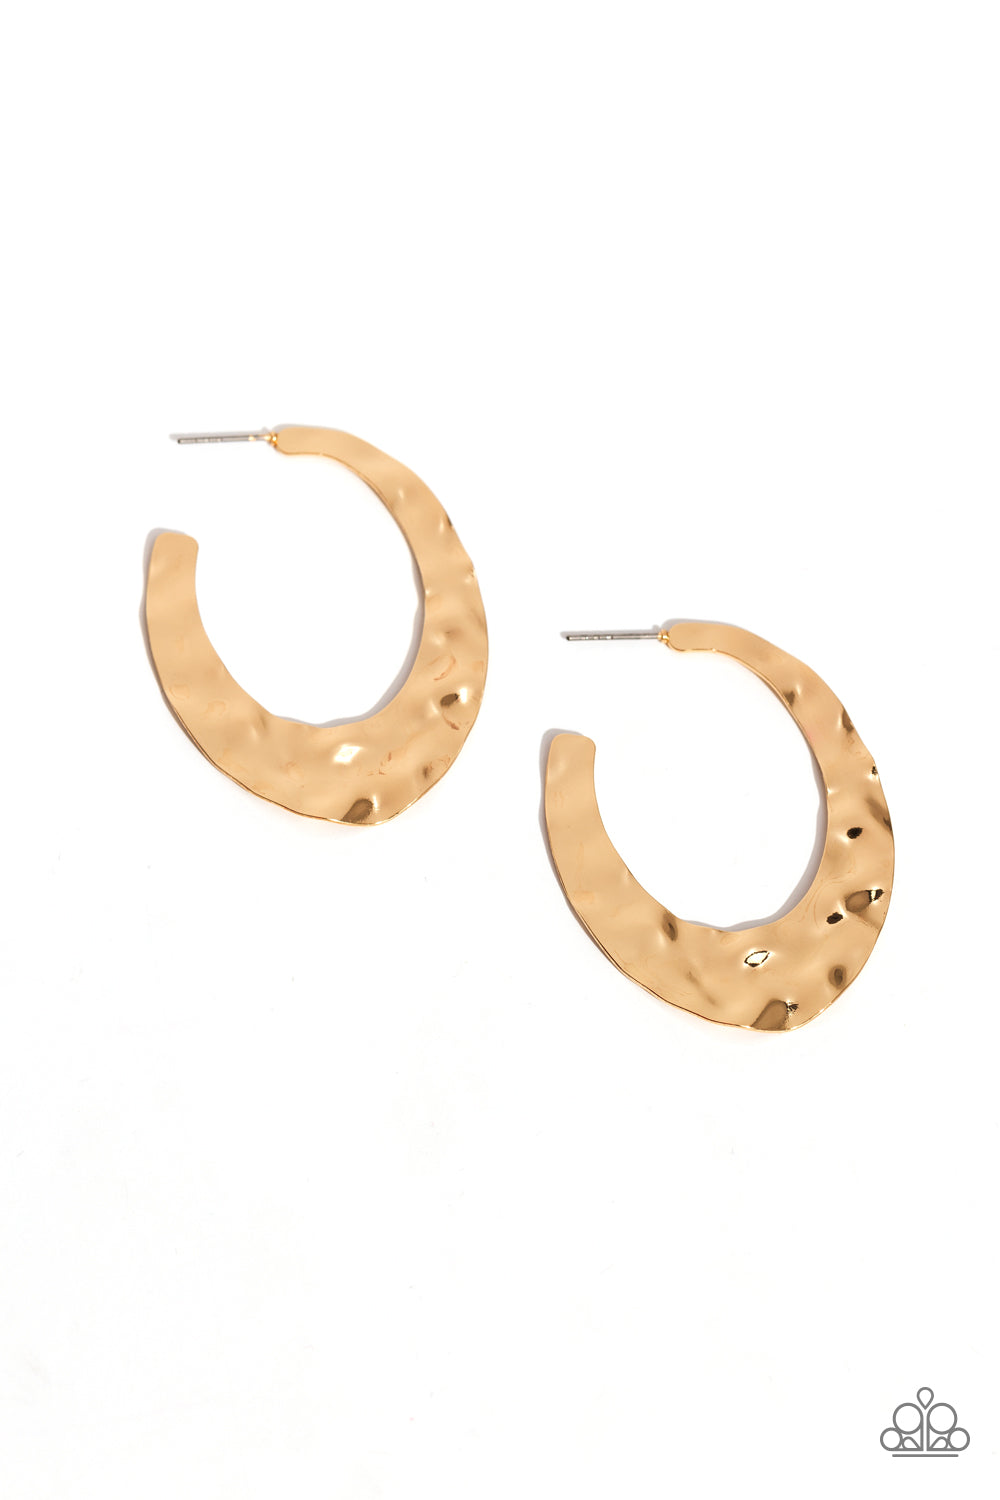 Make a Ripple - Gold Earrings